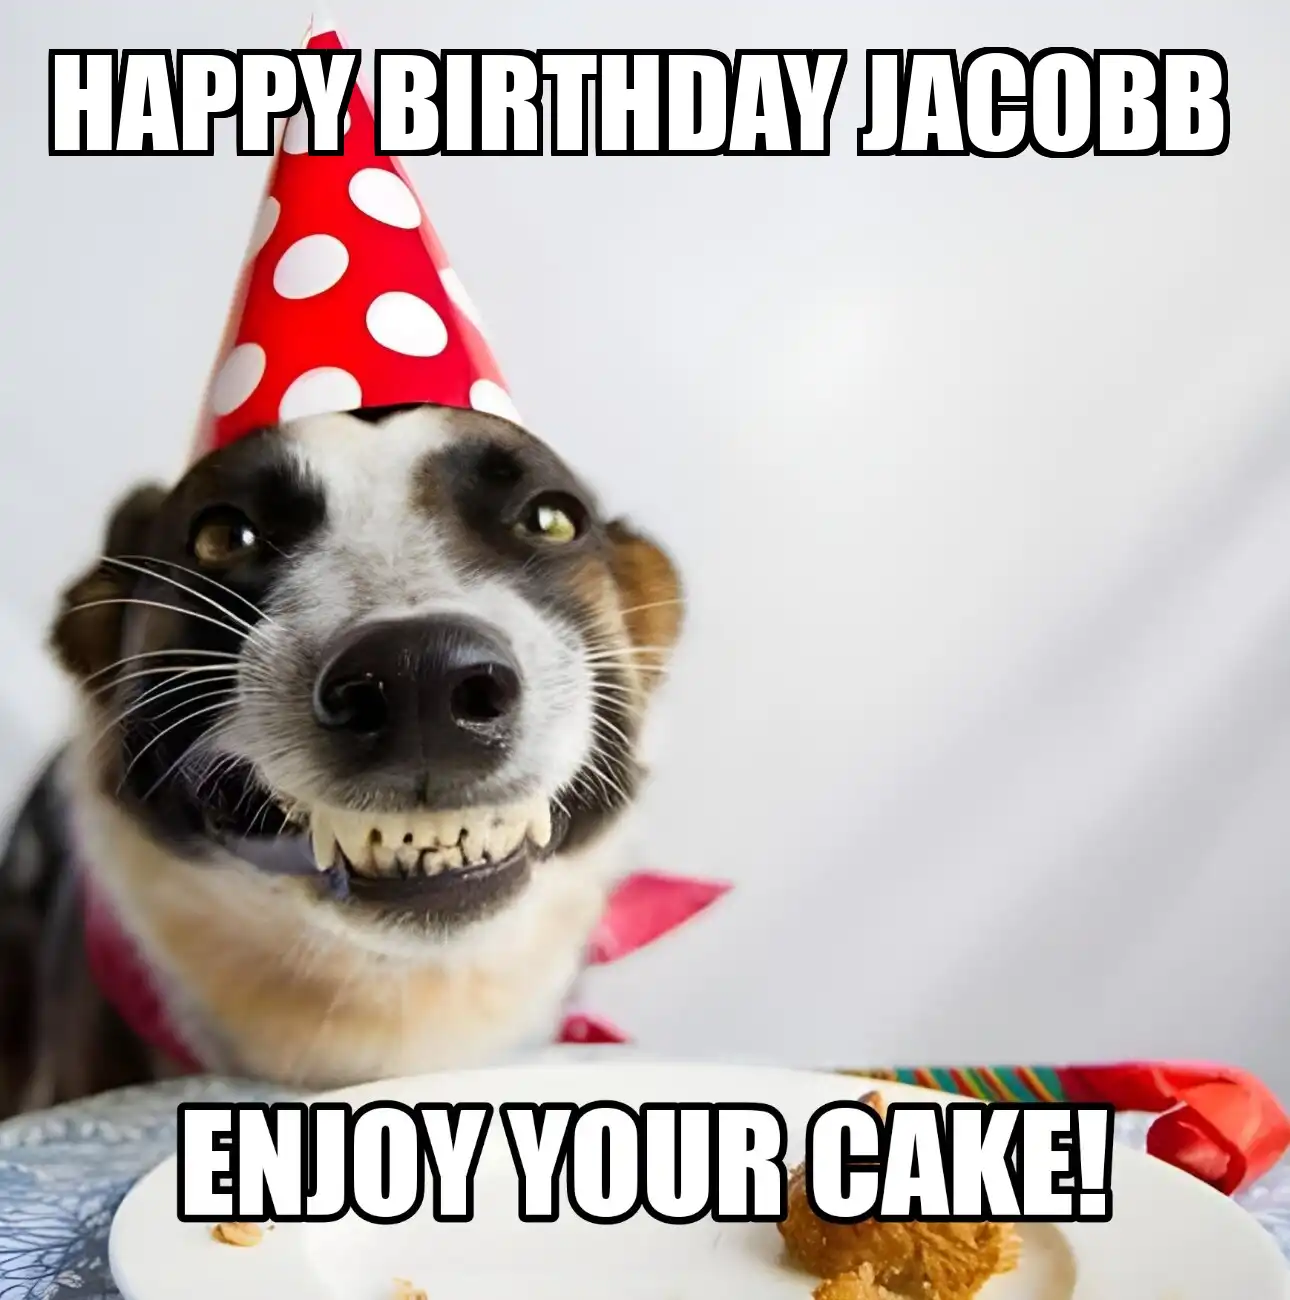 Happy Birthday Jacobb Enjoy Your Cake Dog Meme